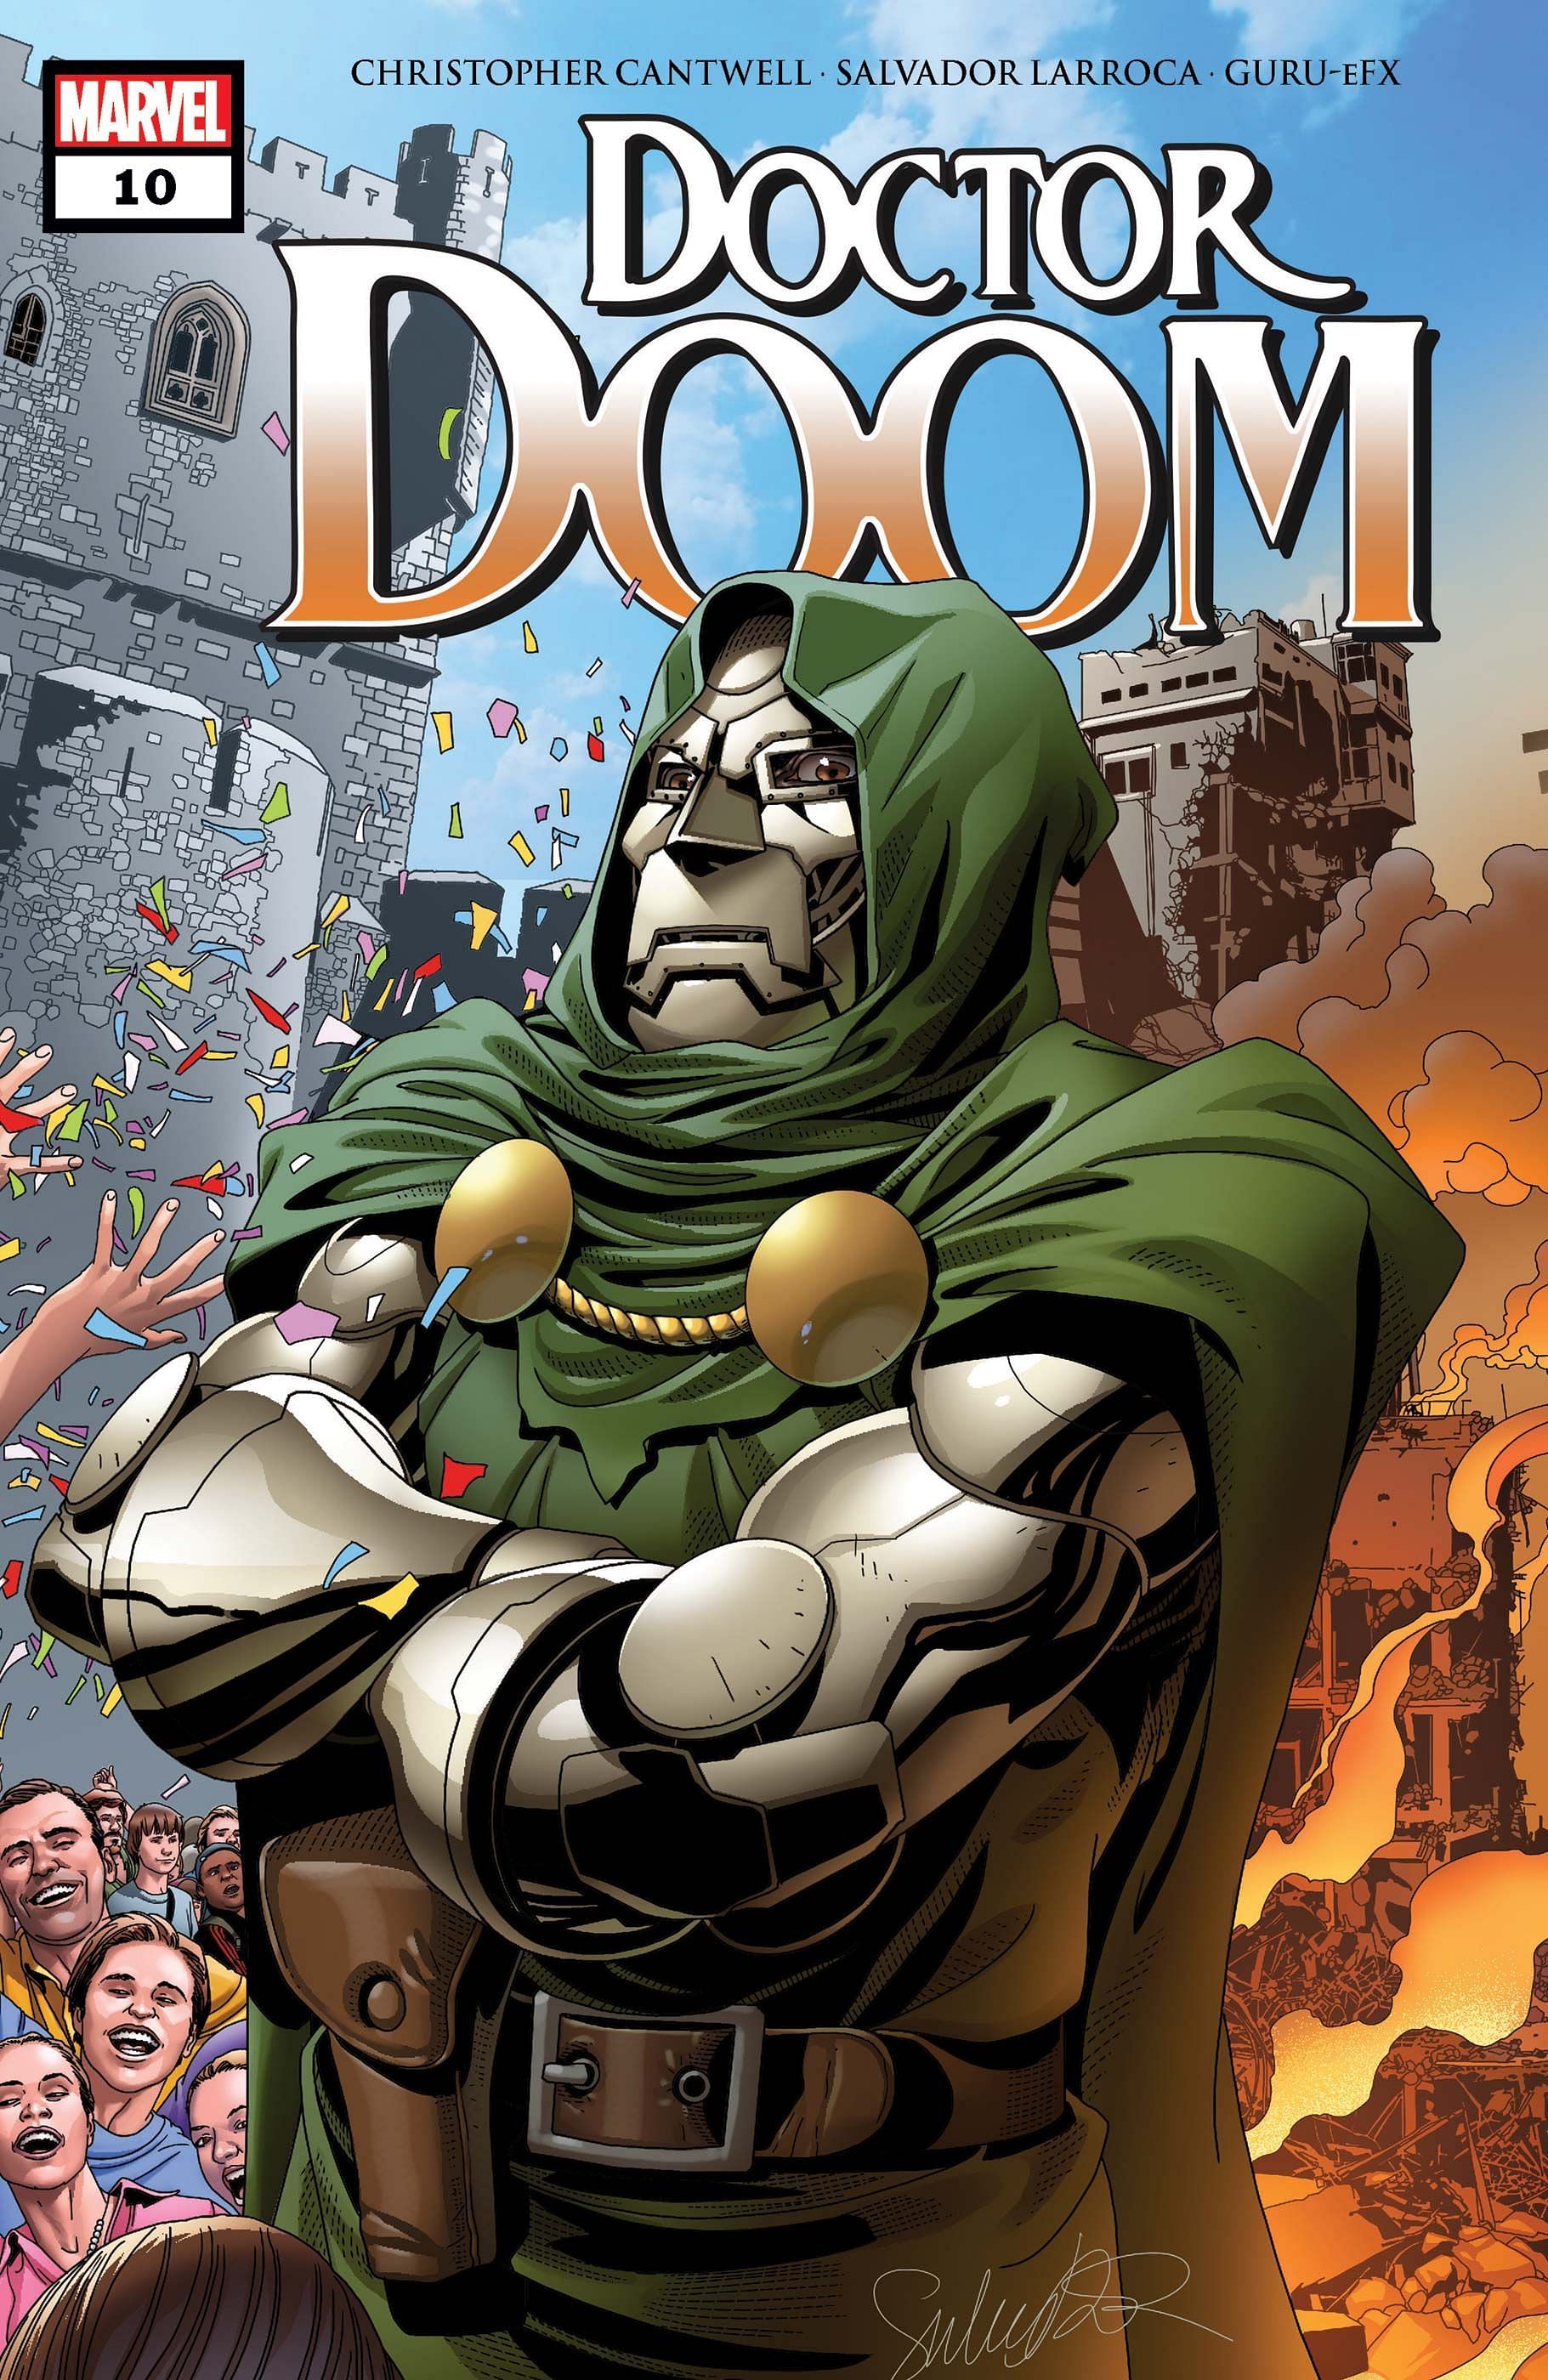 Doctor Doom (Image via Marvel)